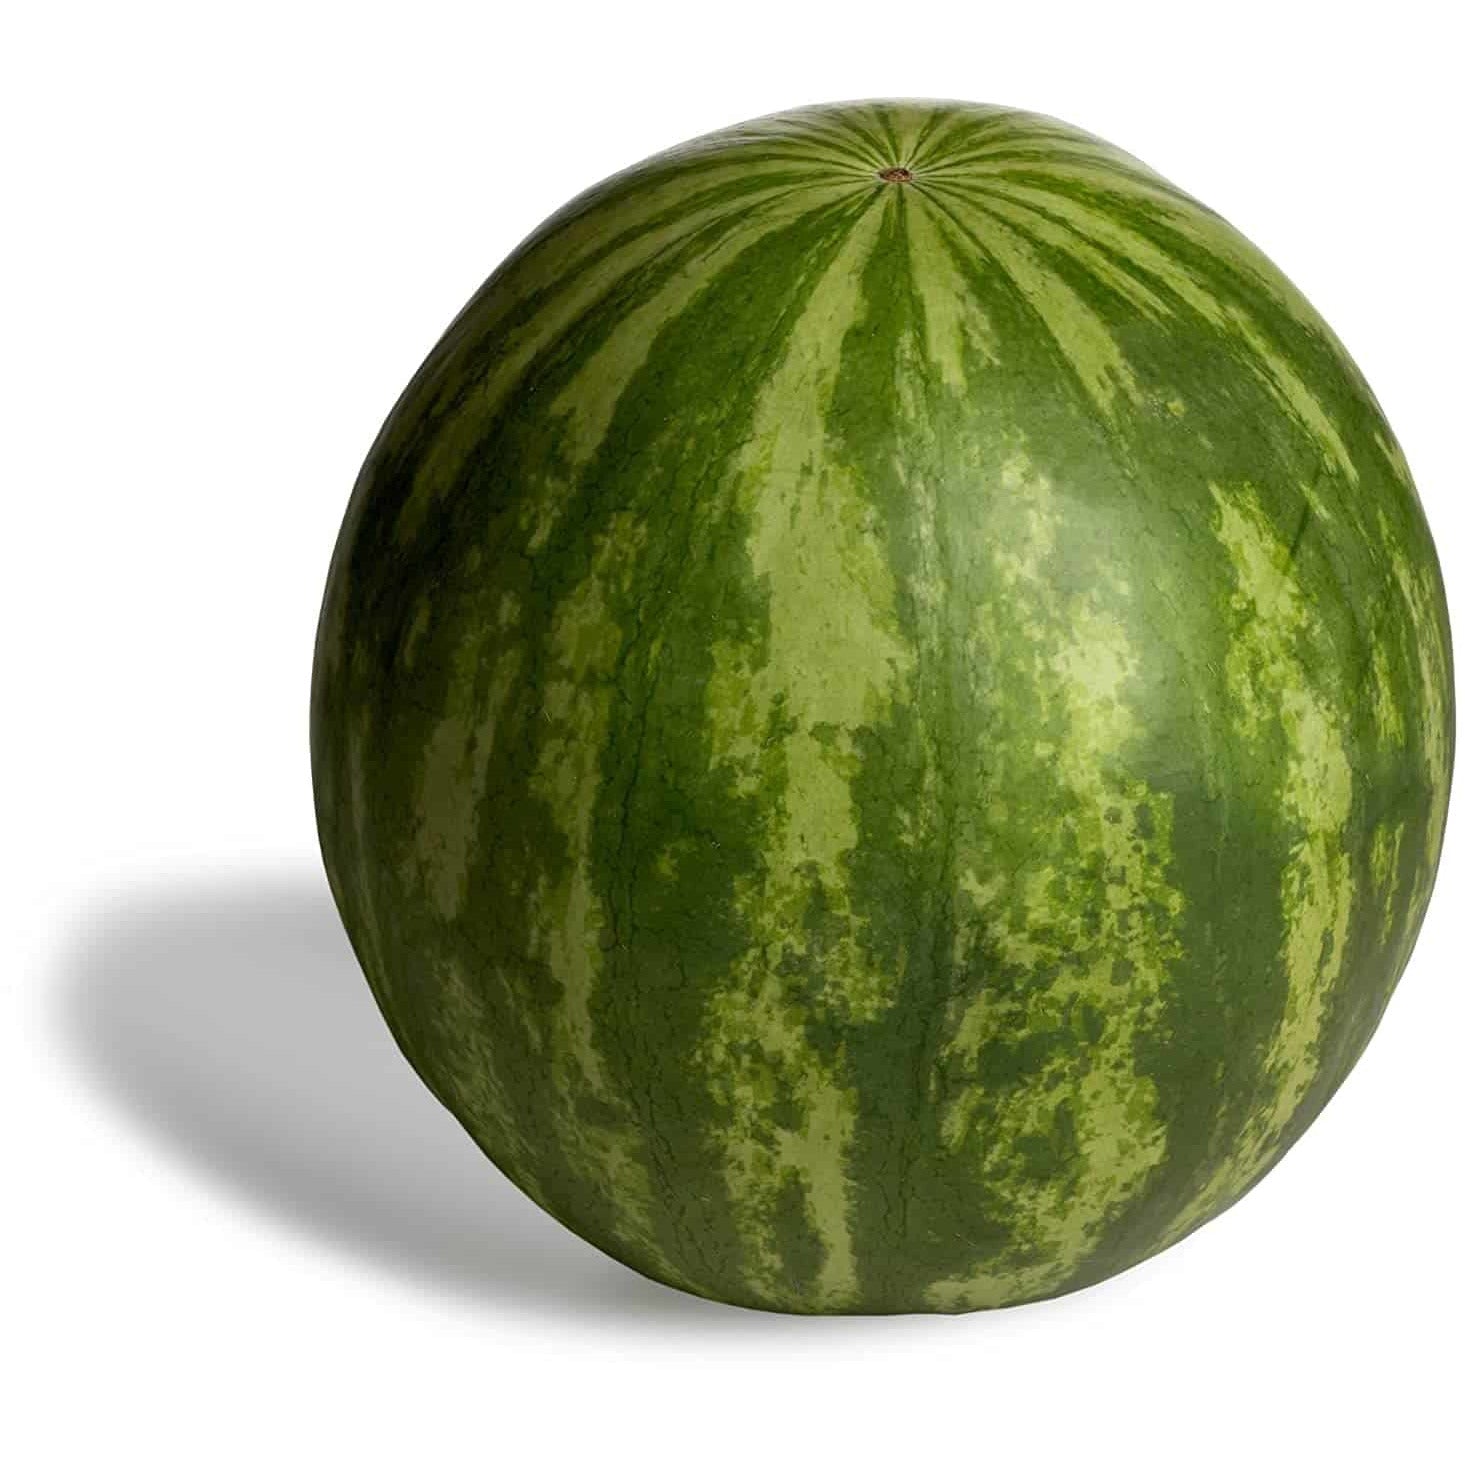 Melon Watermelon Seedless Conventional, 1